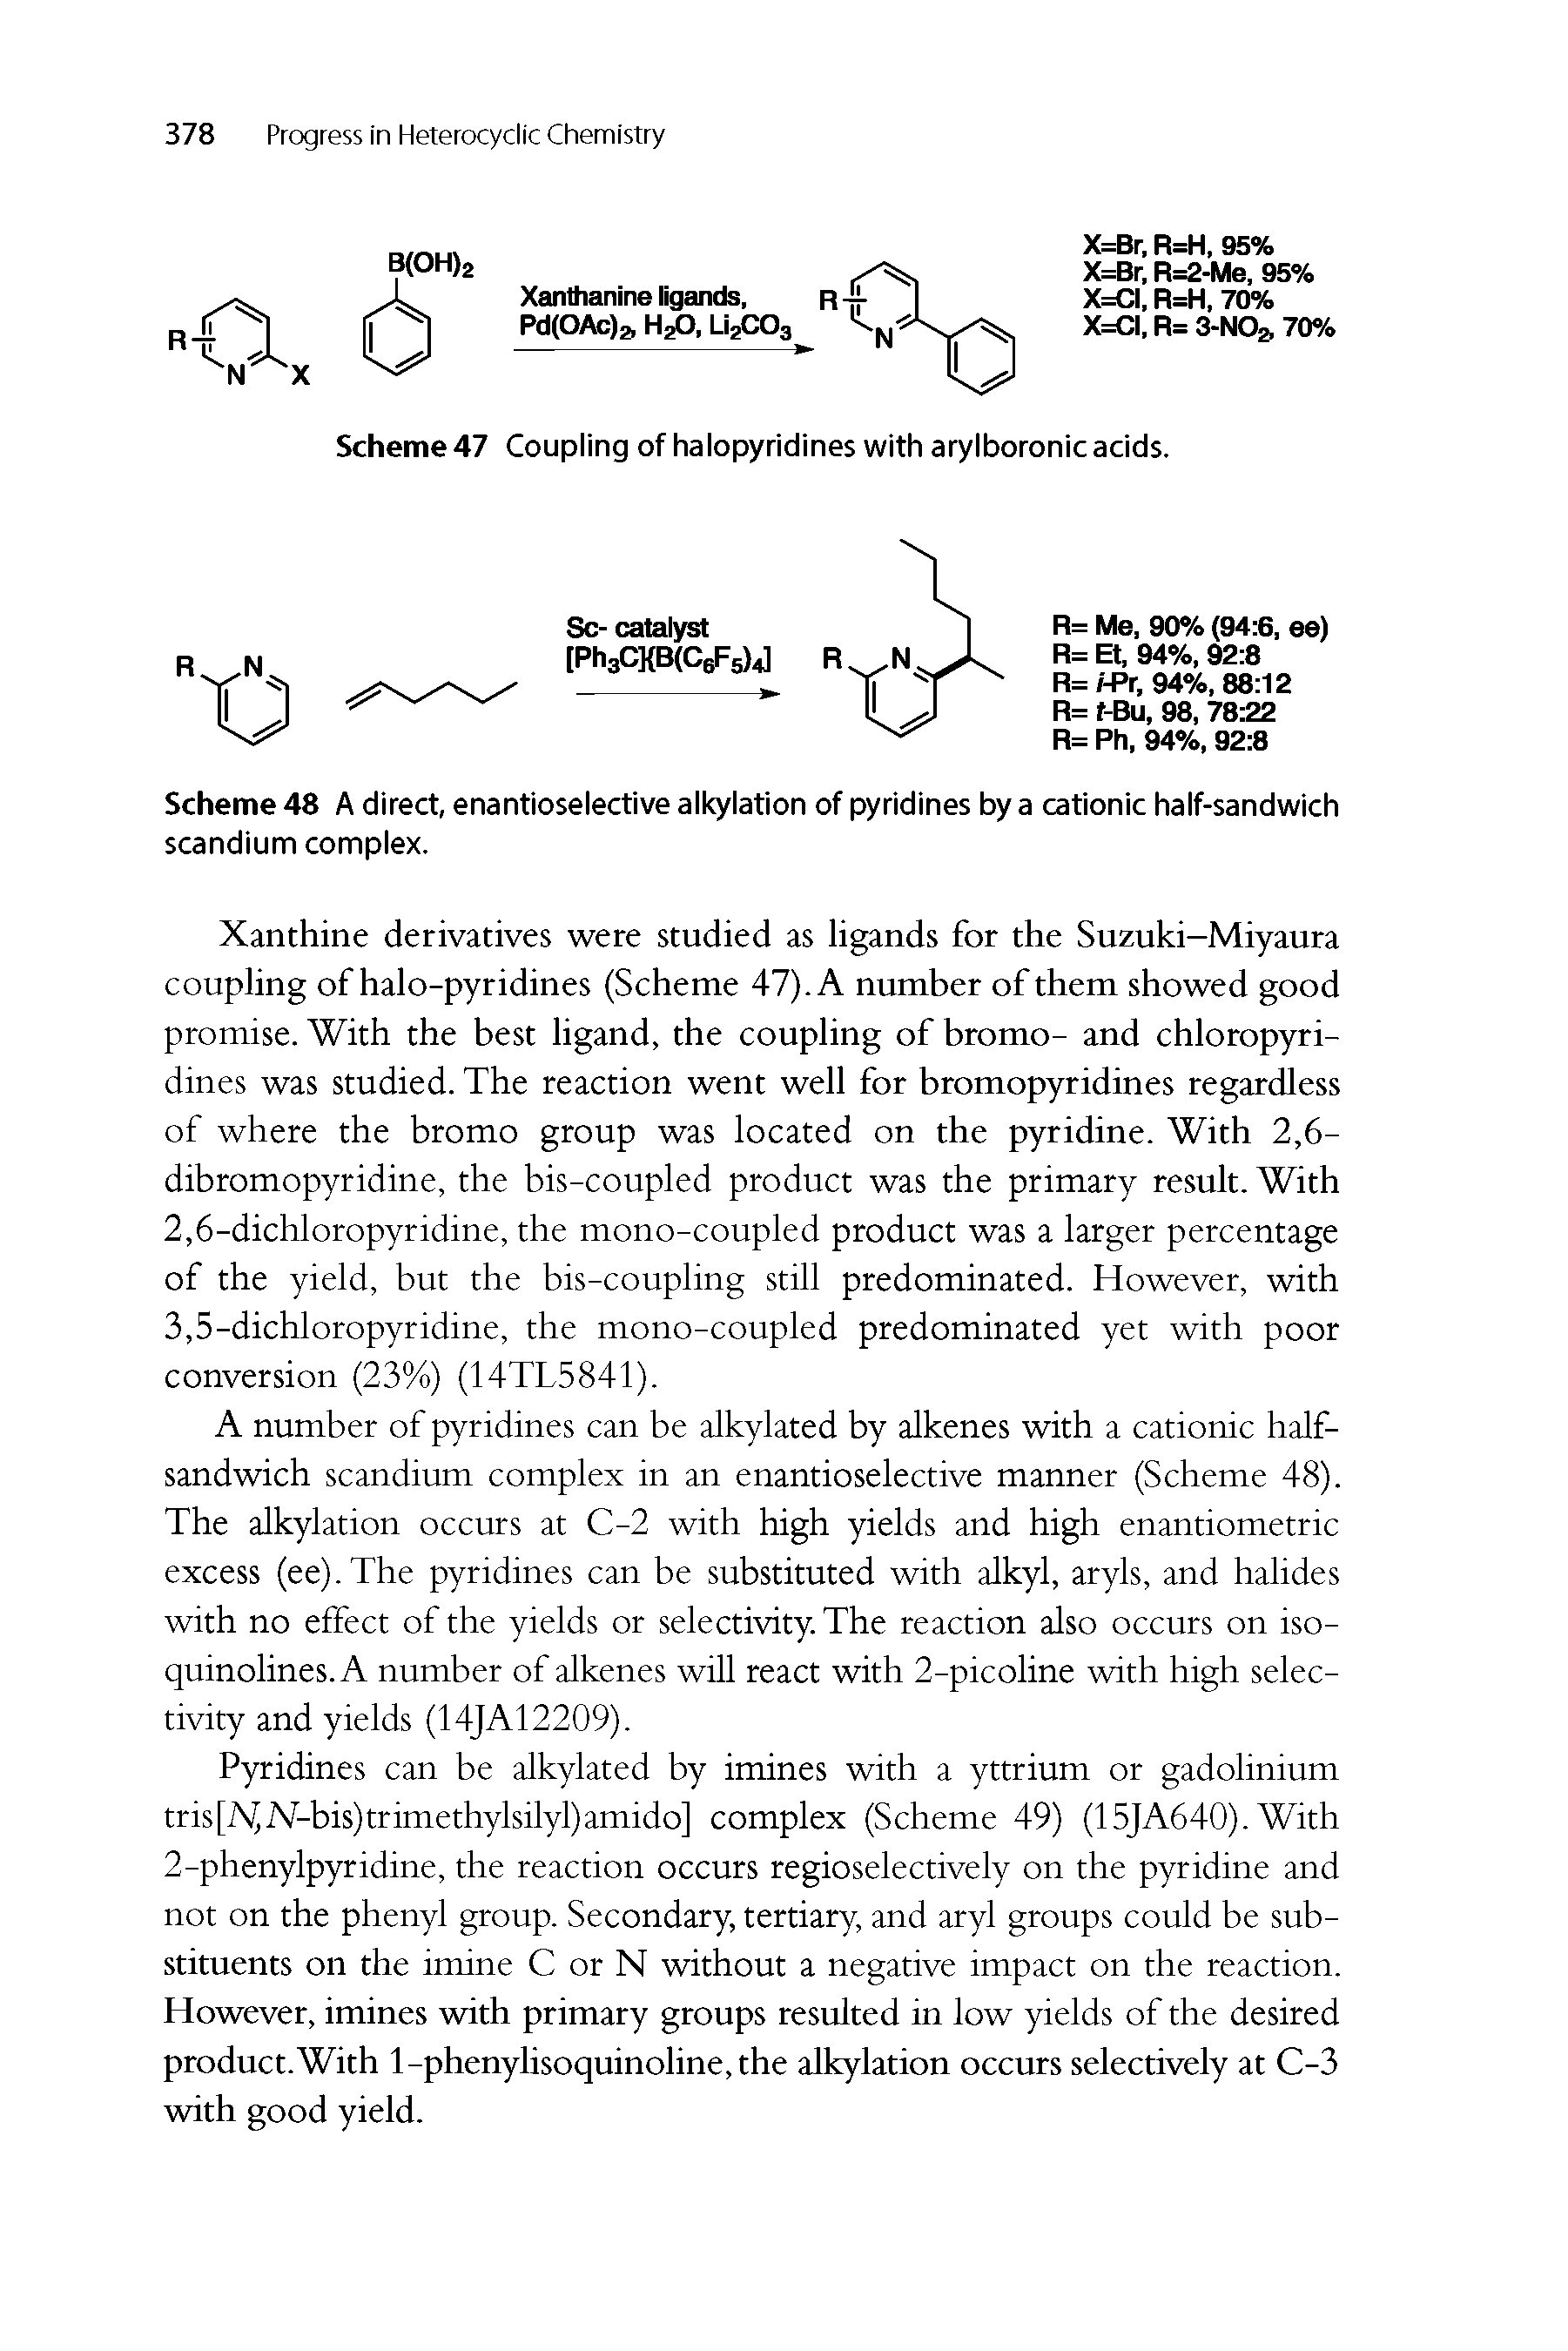 Scheme 48 A direct, enantioselective alkylation of pyridines by a cationic half-sandwich scandium complex.